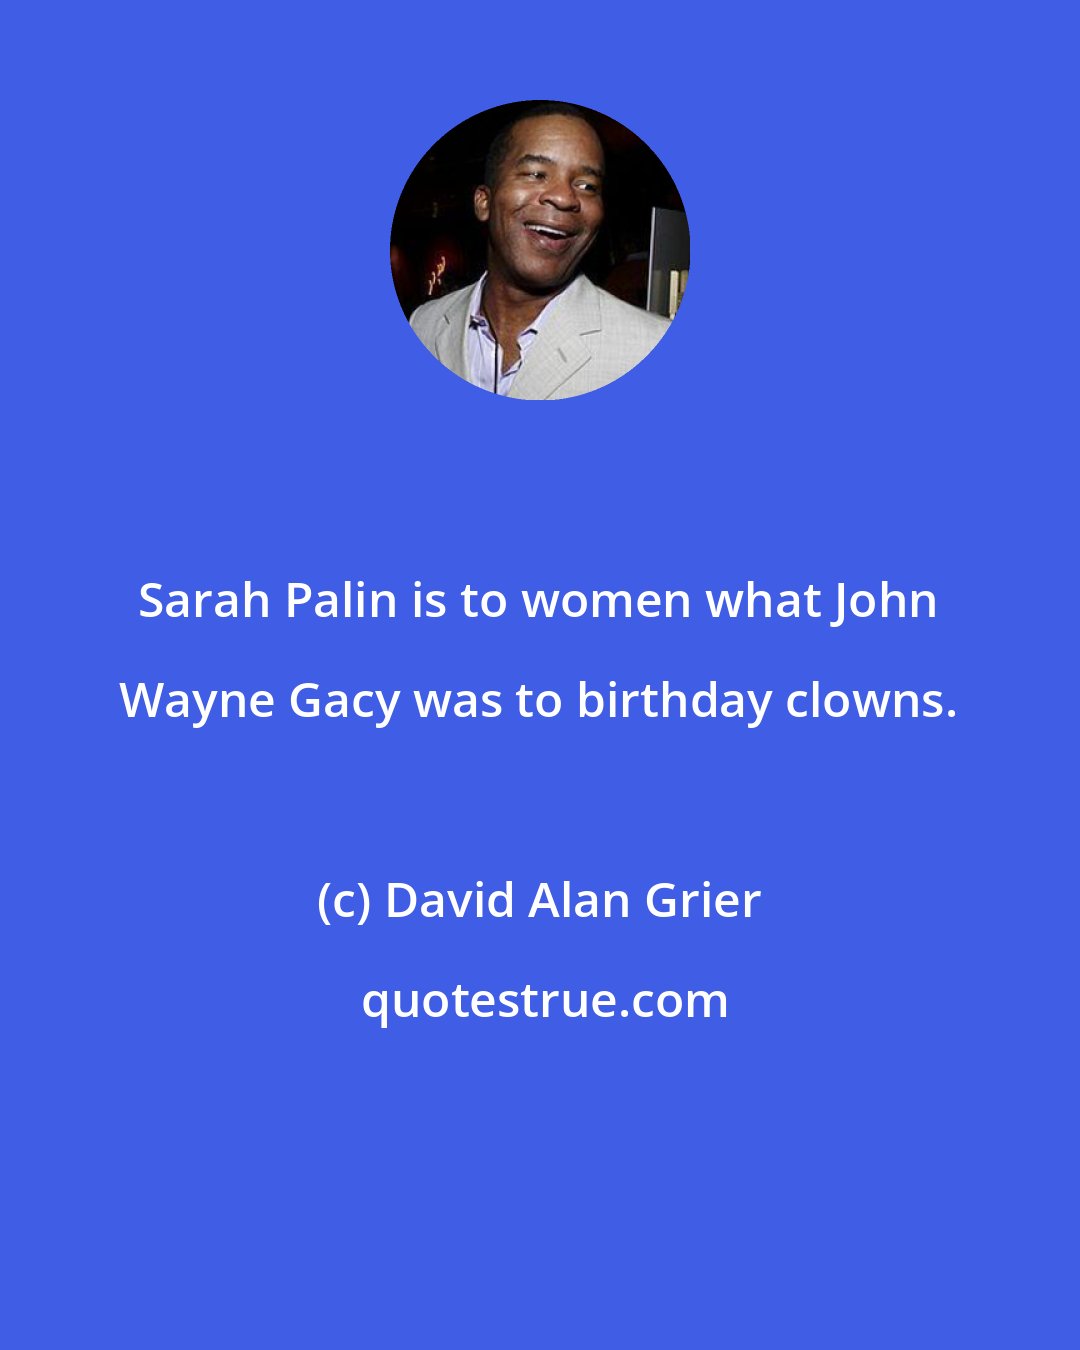 David Alan Grier: Sarah Palin is to women what John Wayne Gacy was to birthday clowns.